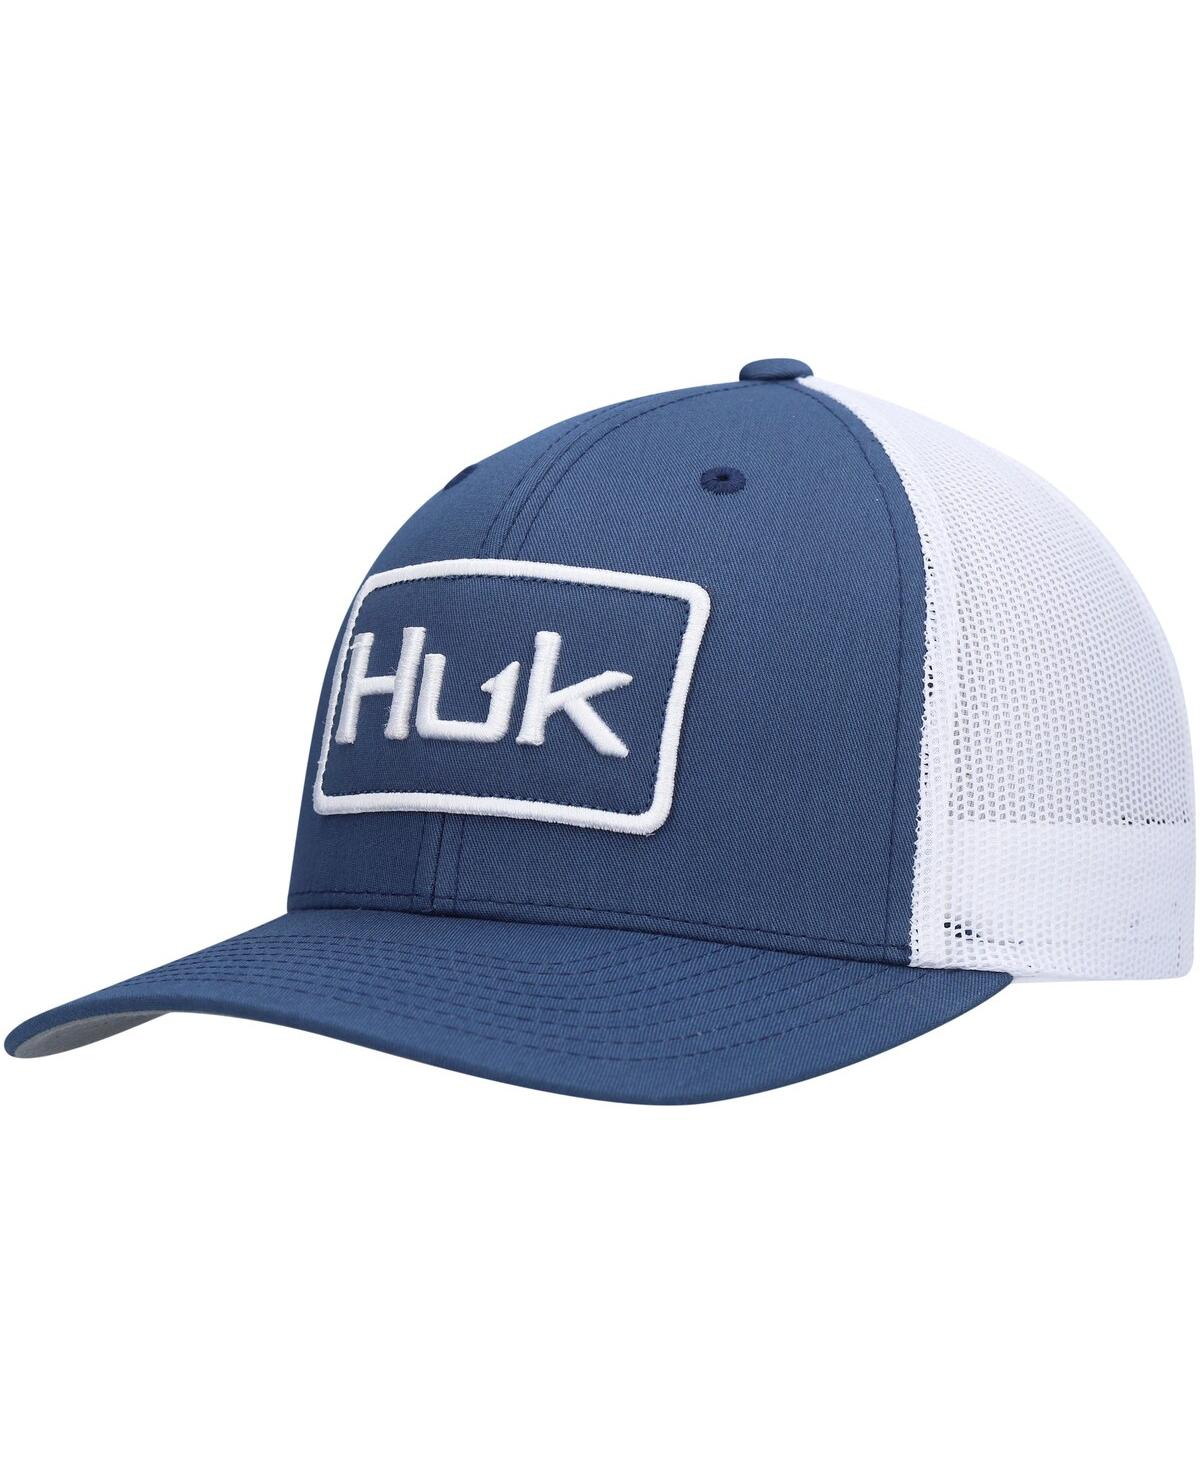 Men's Huk Navy, White Solid Trucker Snapback Hat - Navy, White